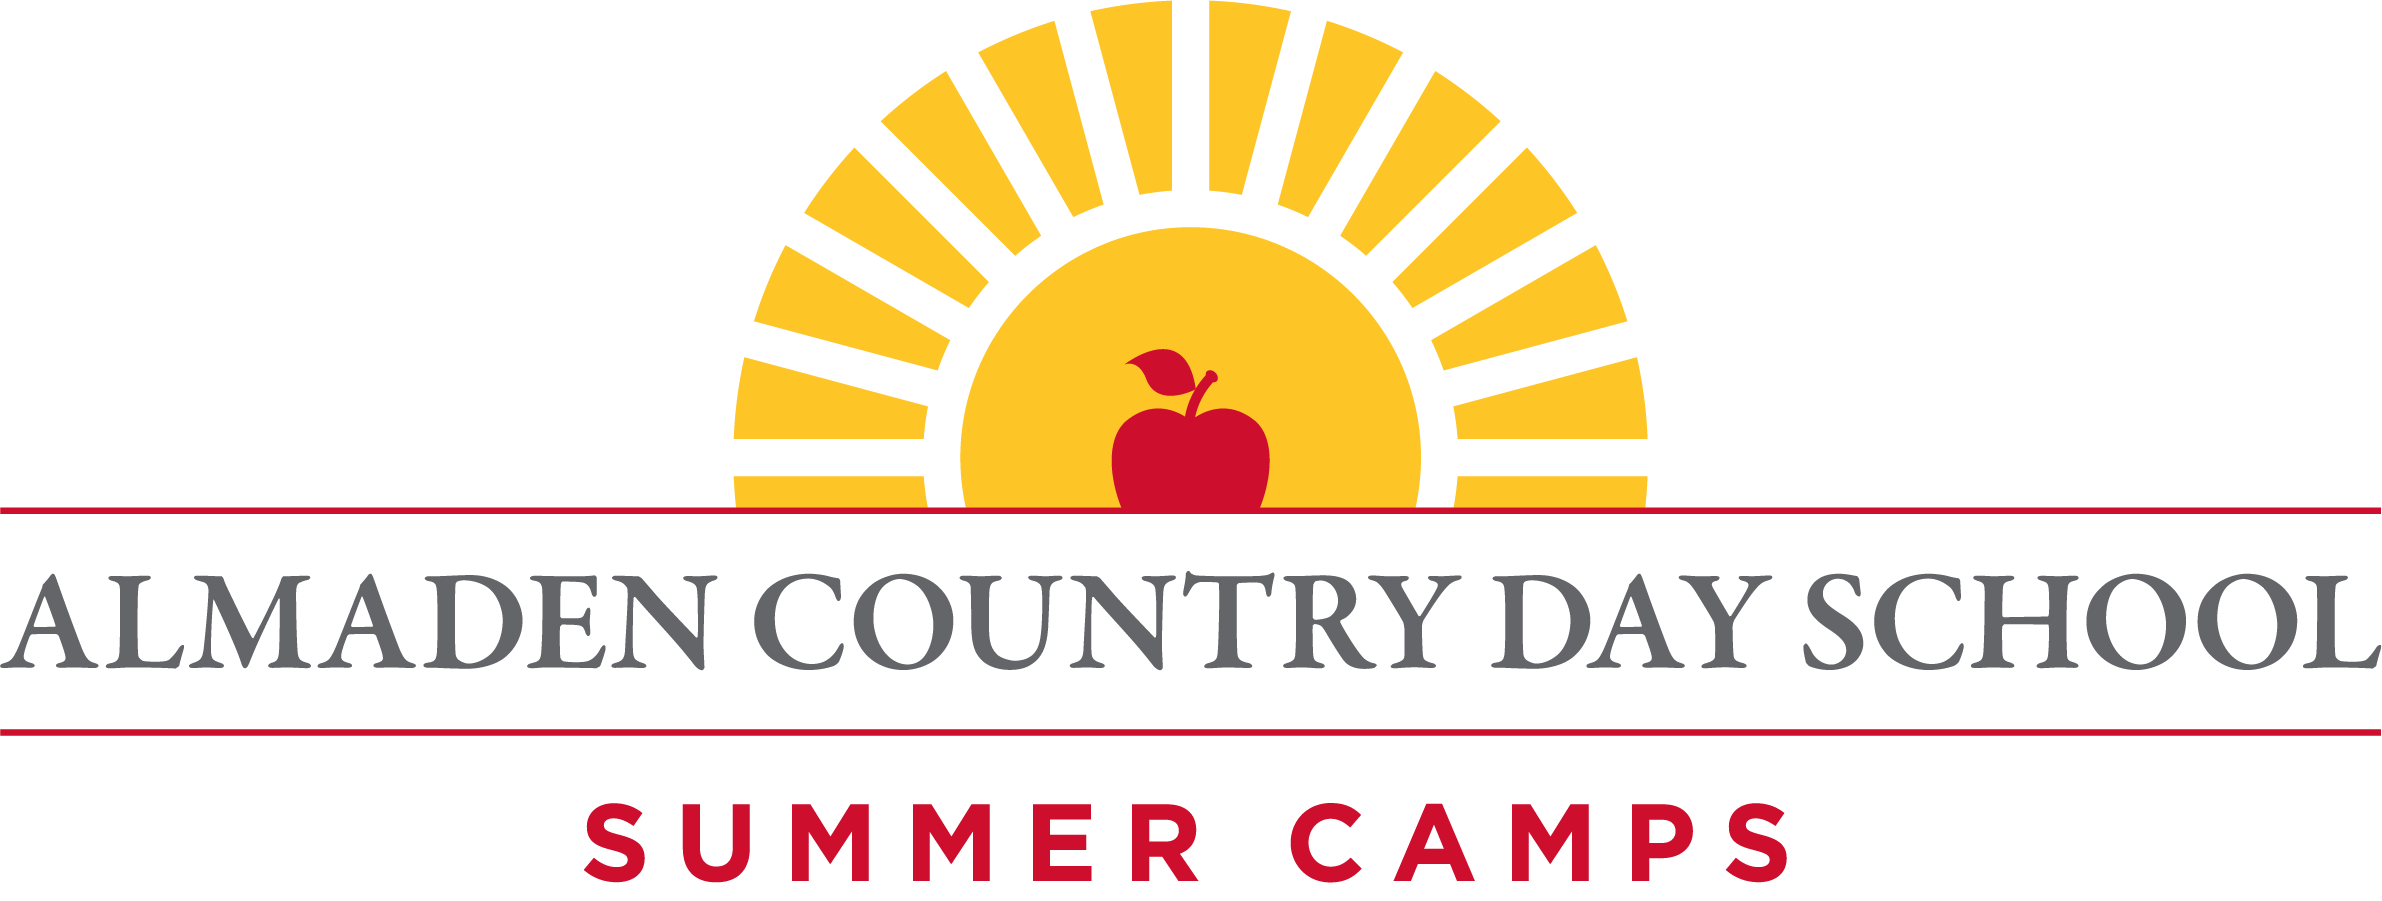 Almaden_Summer Camps logo_horizontal_full color_RGB